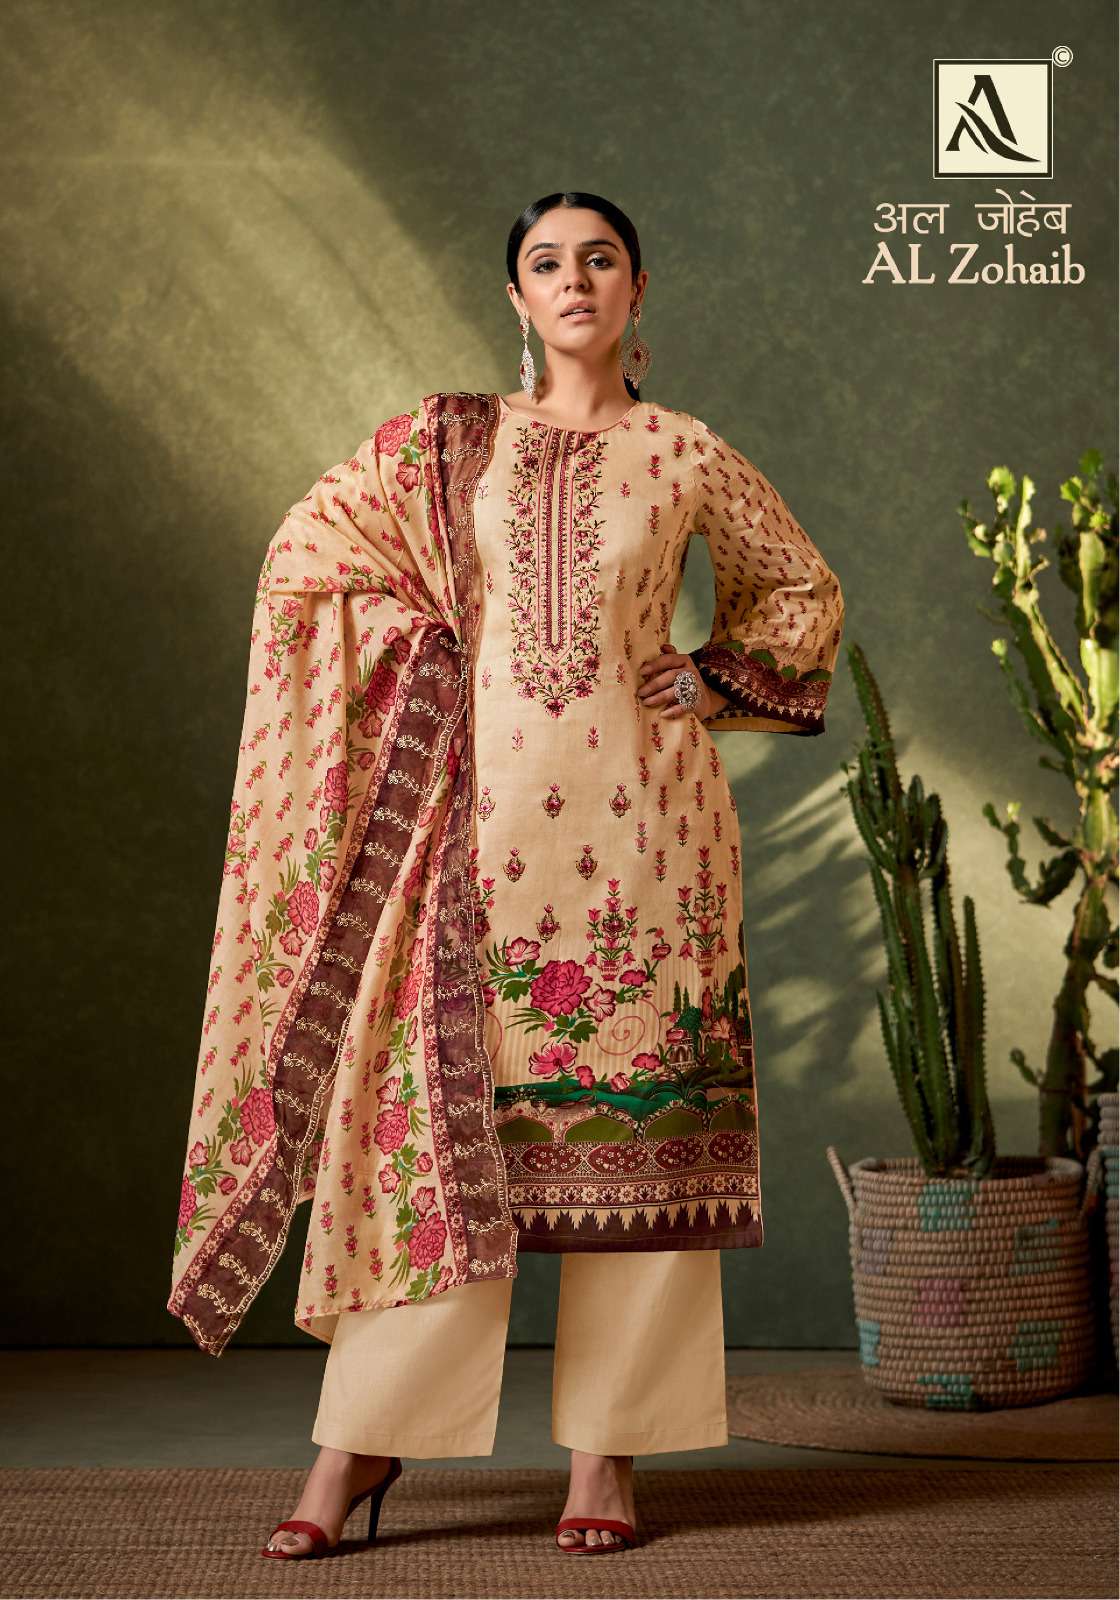 alok suit al zohaib designer pakistani salwar kameez wholesaler surat gujarat